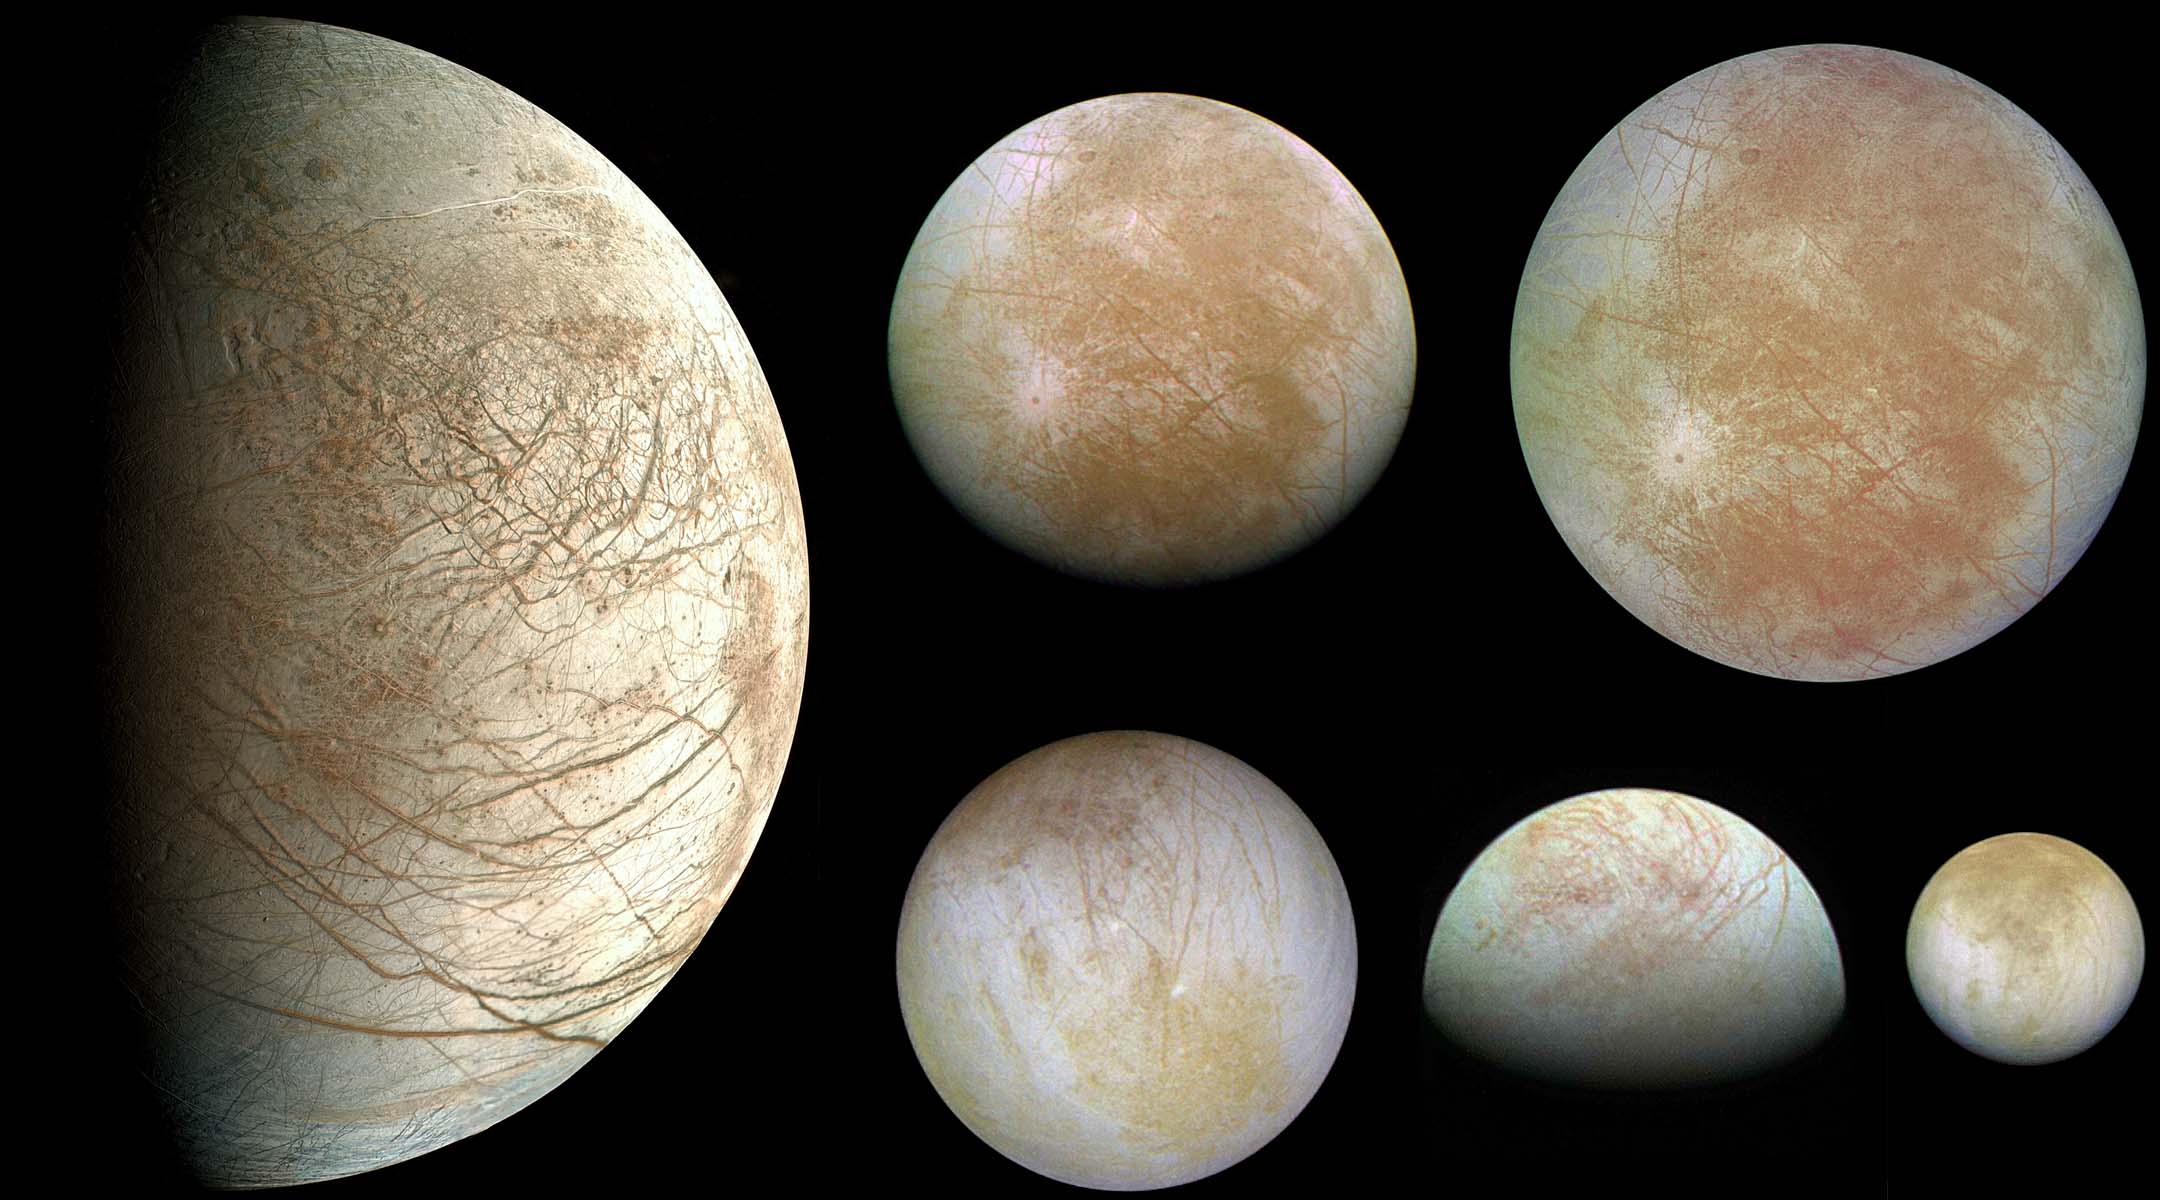 Europa: Jupiter’s Moon